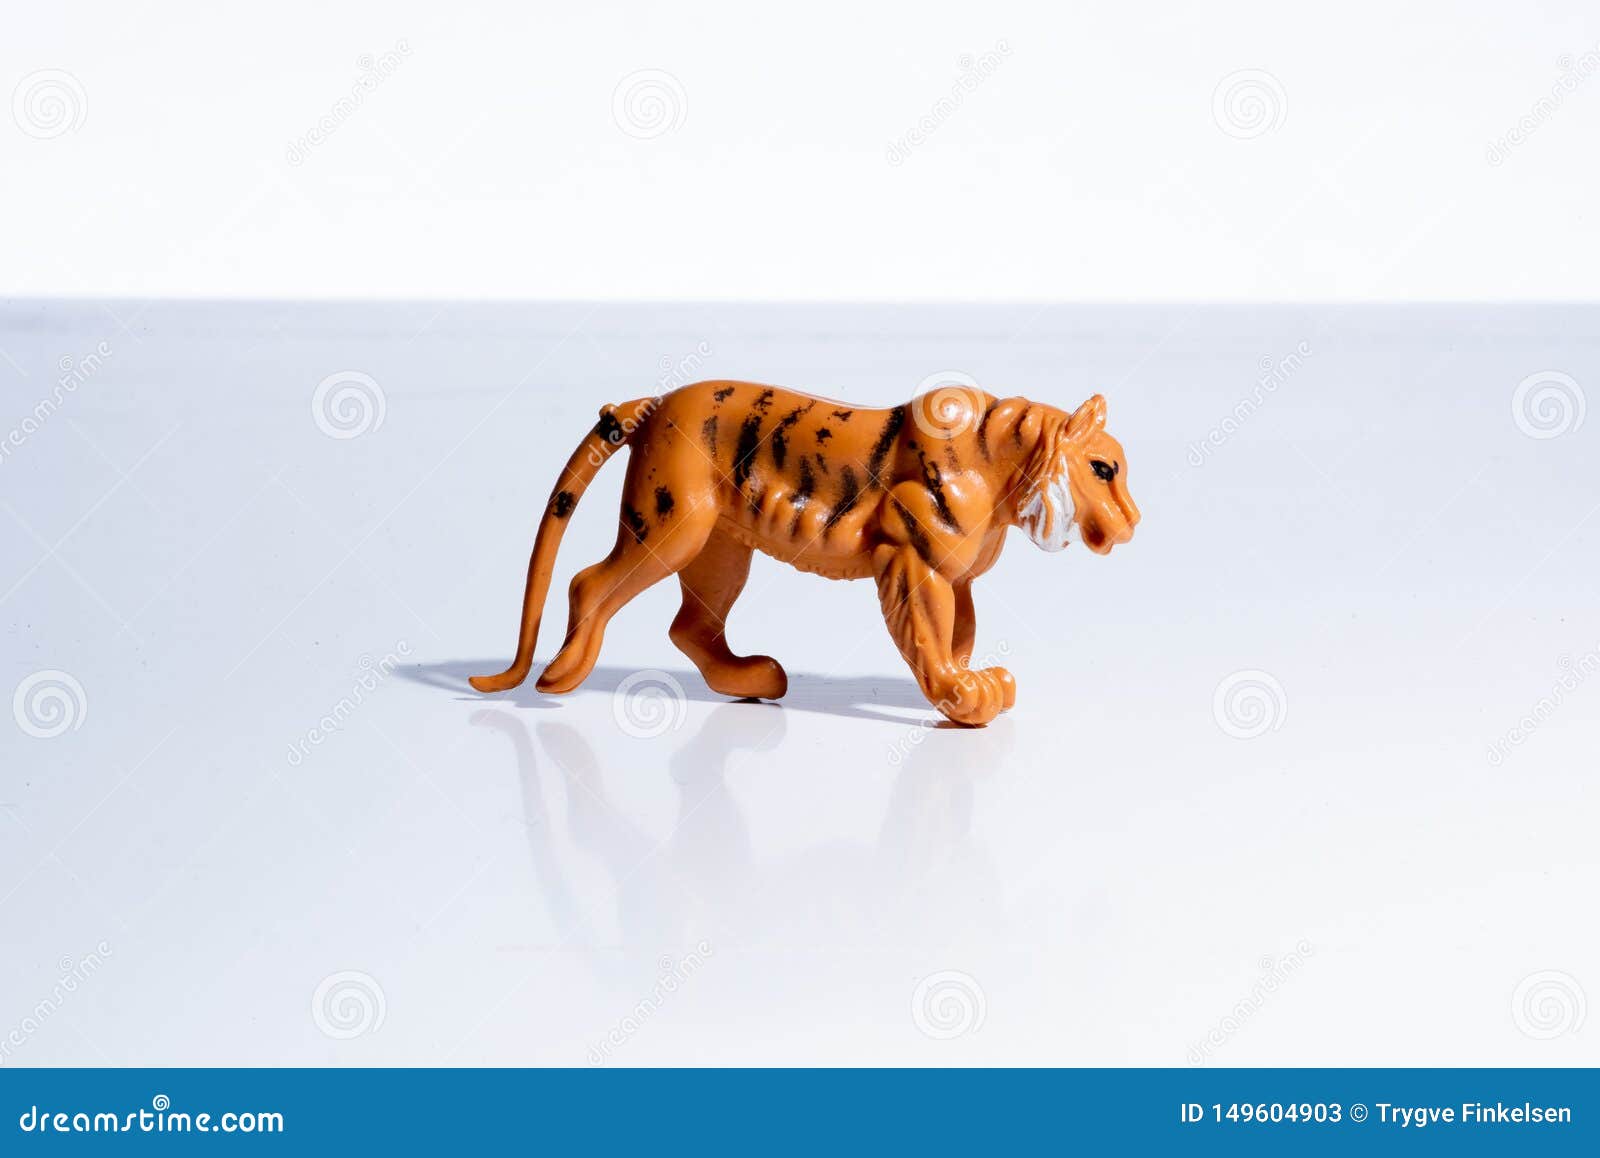 vintage plastic tiger toy figure